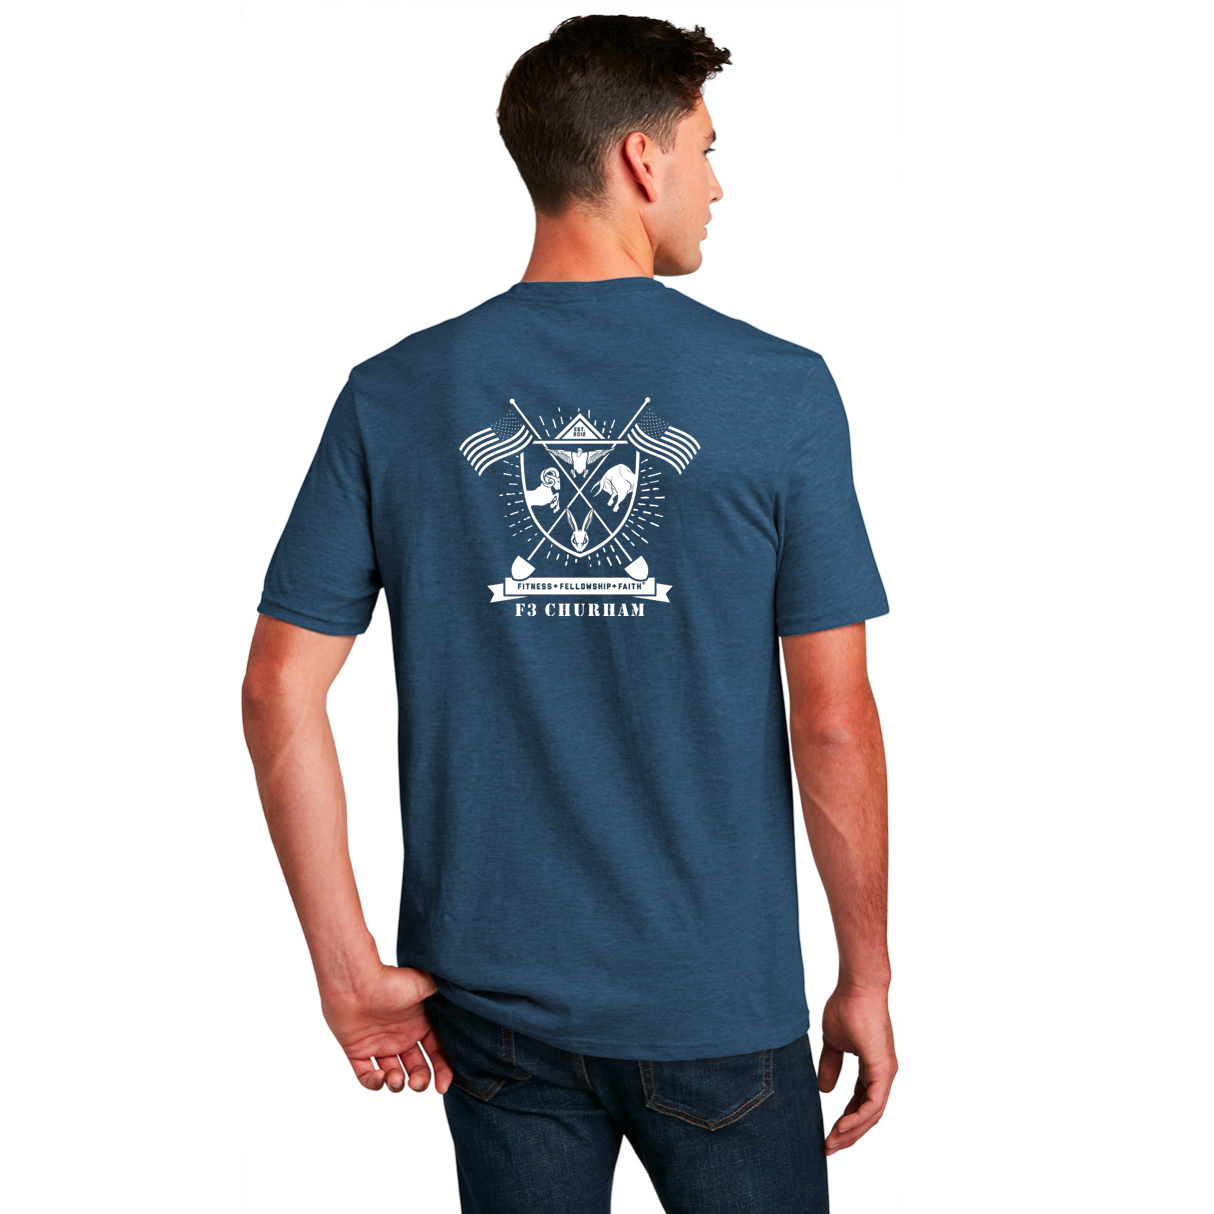 F3 Churham Shirt Pre-Order June 2023